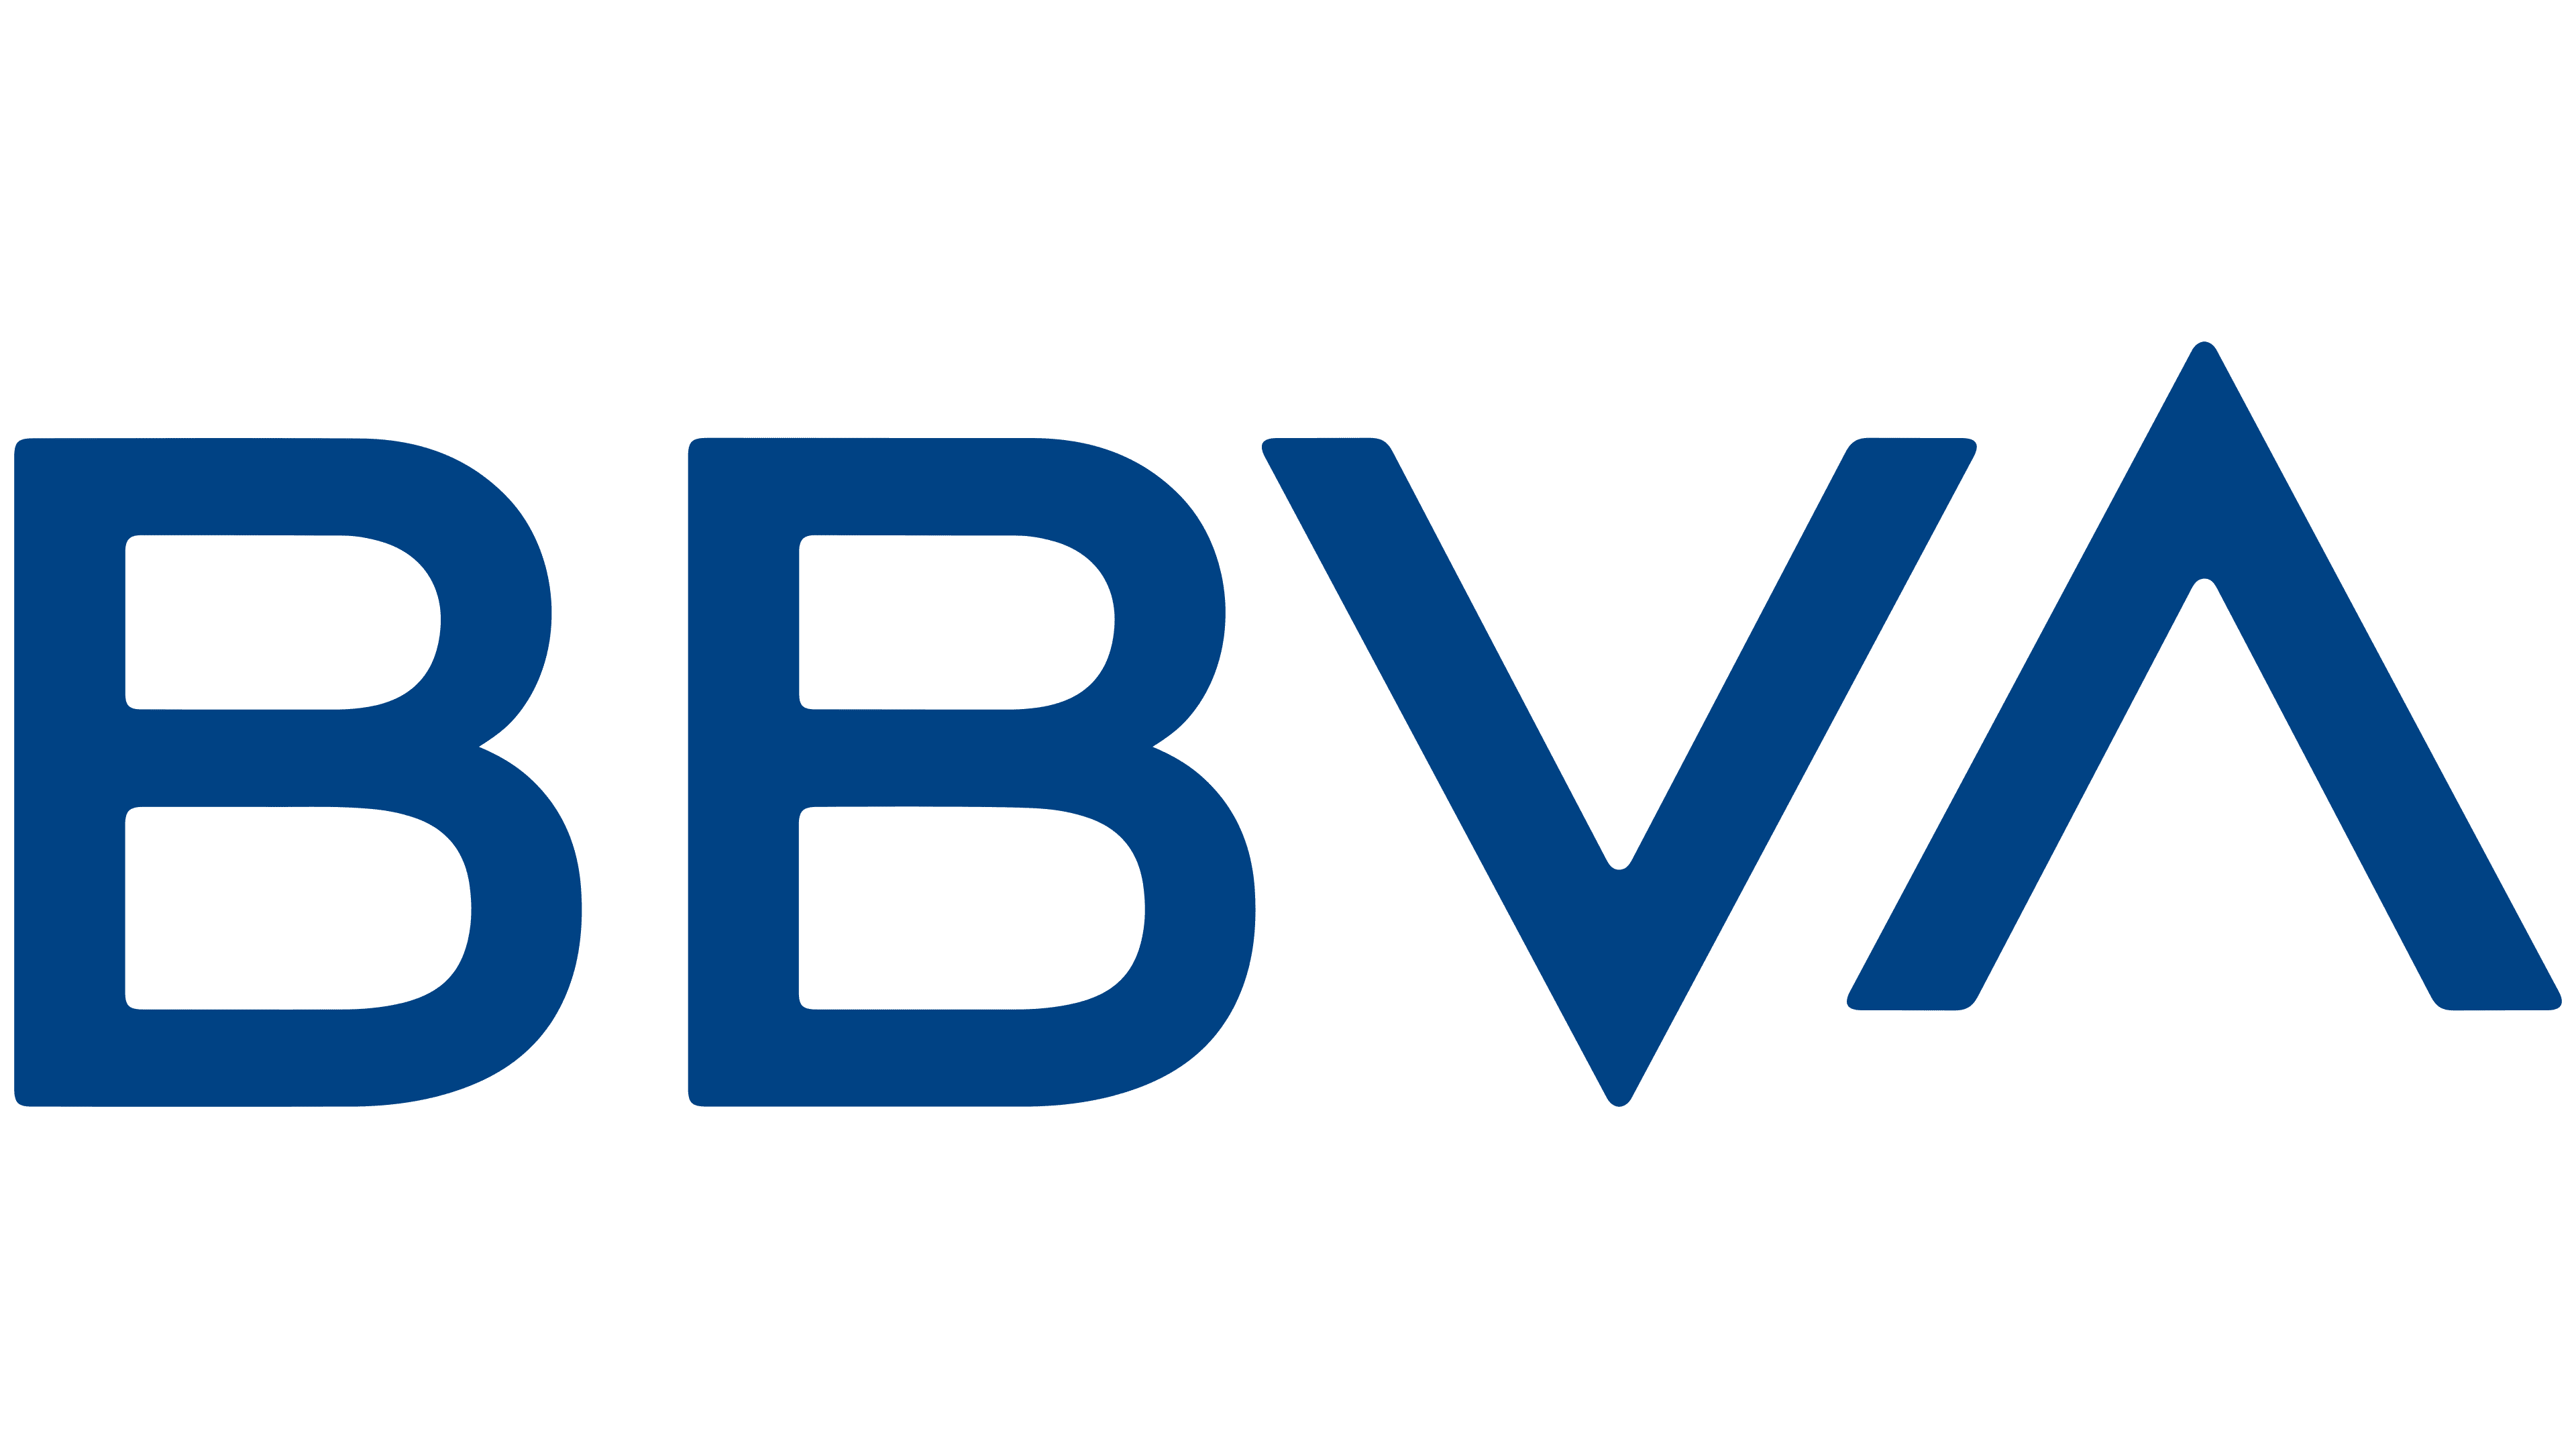 BBVA Logo: history, meaning of the emblem